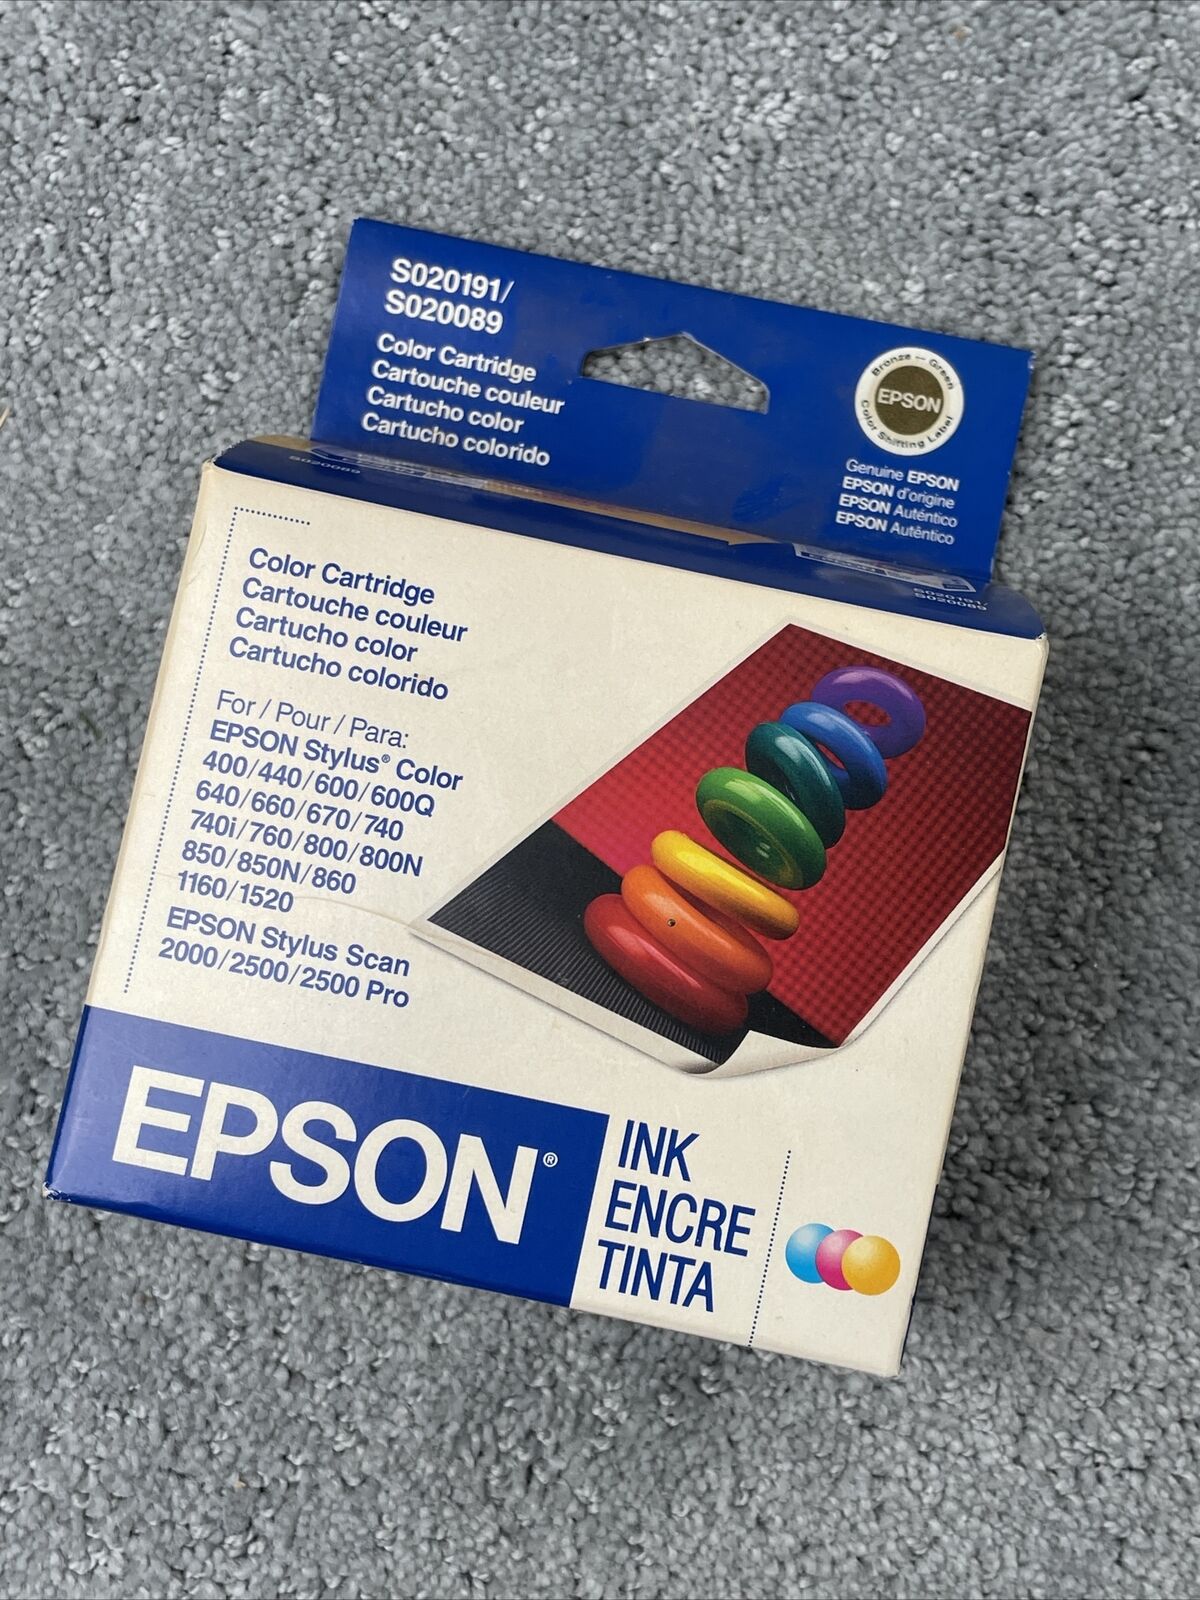 Epson S–020191 S-020089 color ink cartridge magenta yellow blue printer